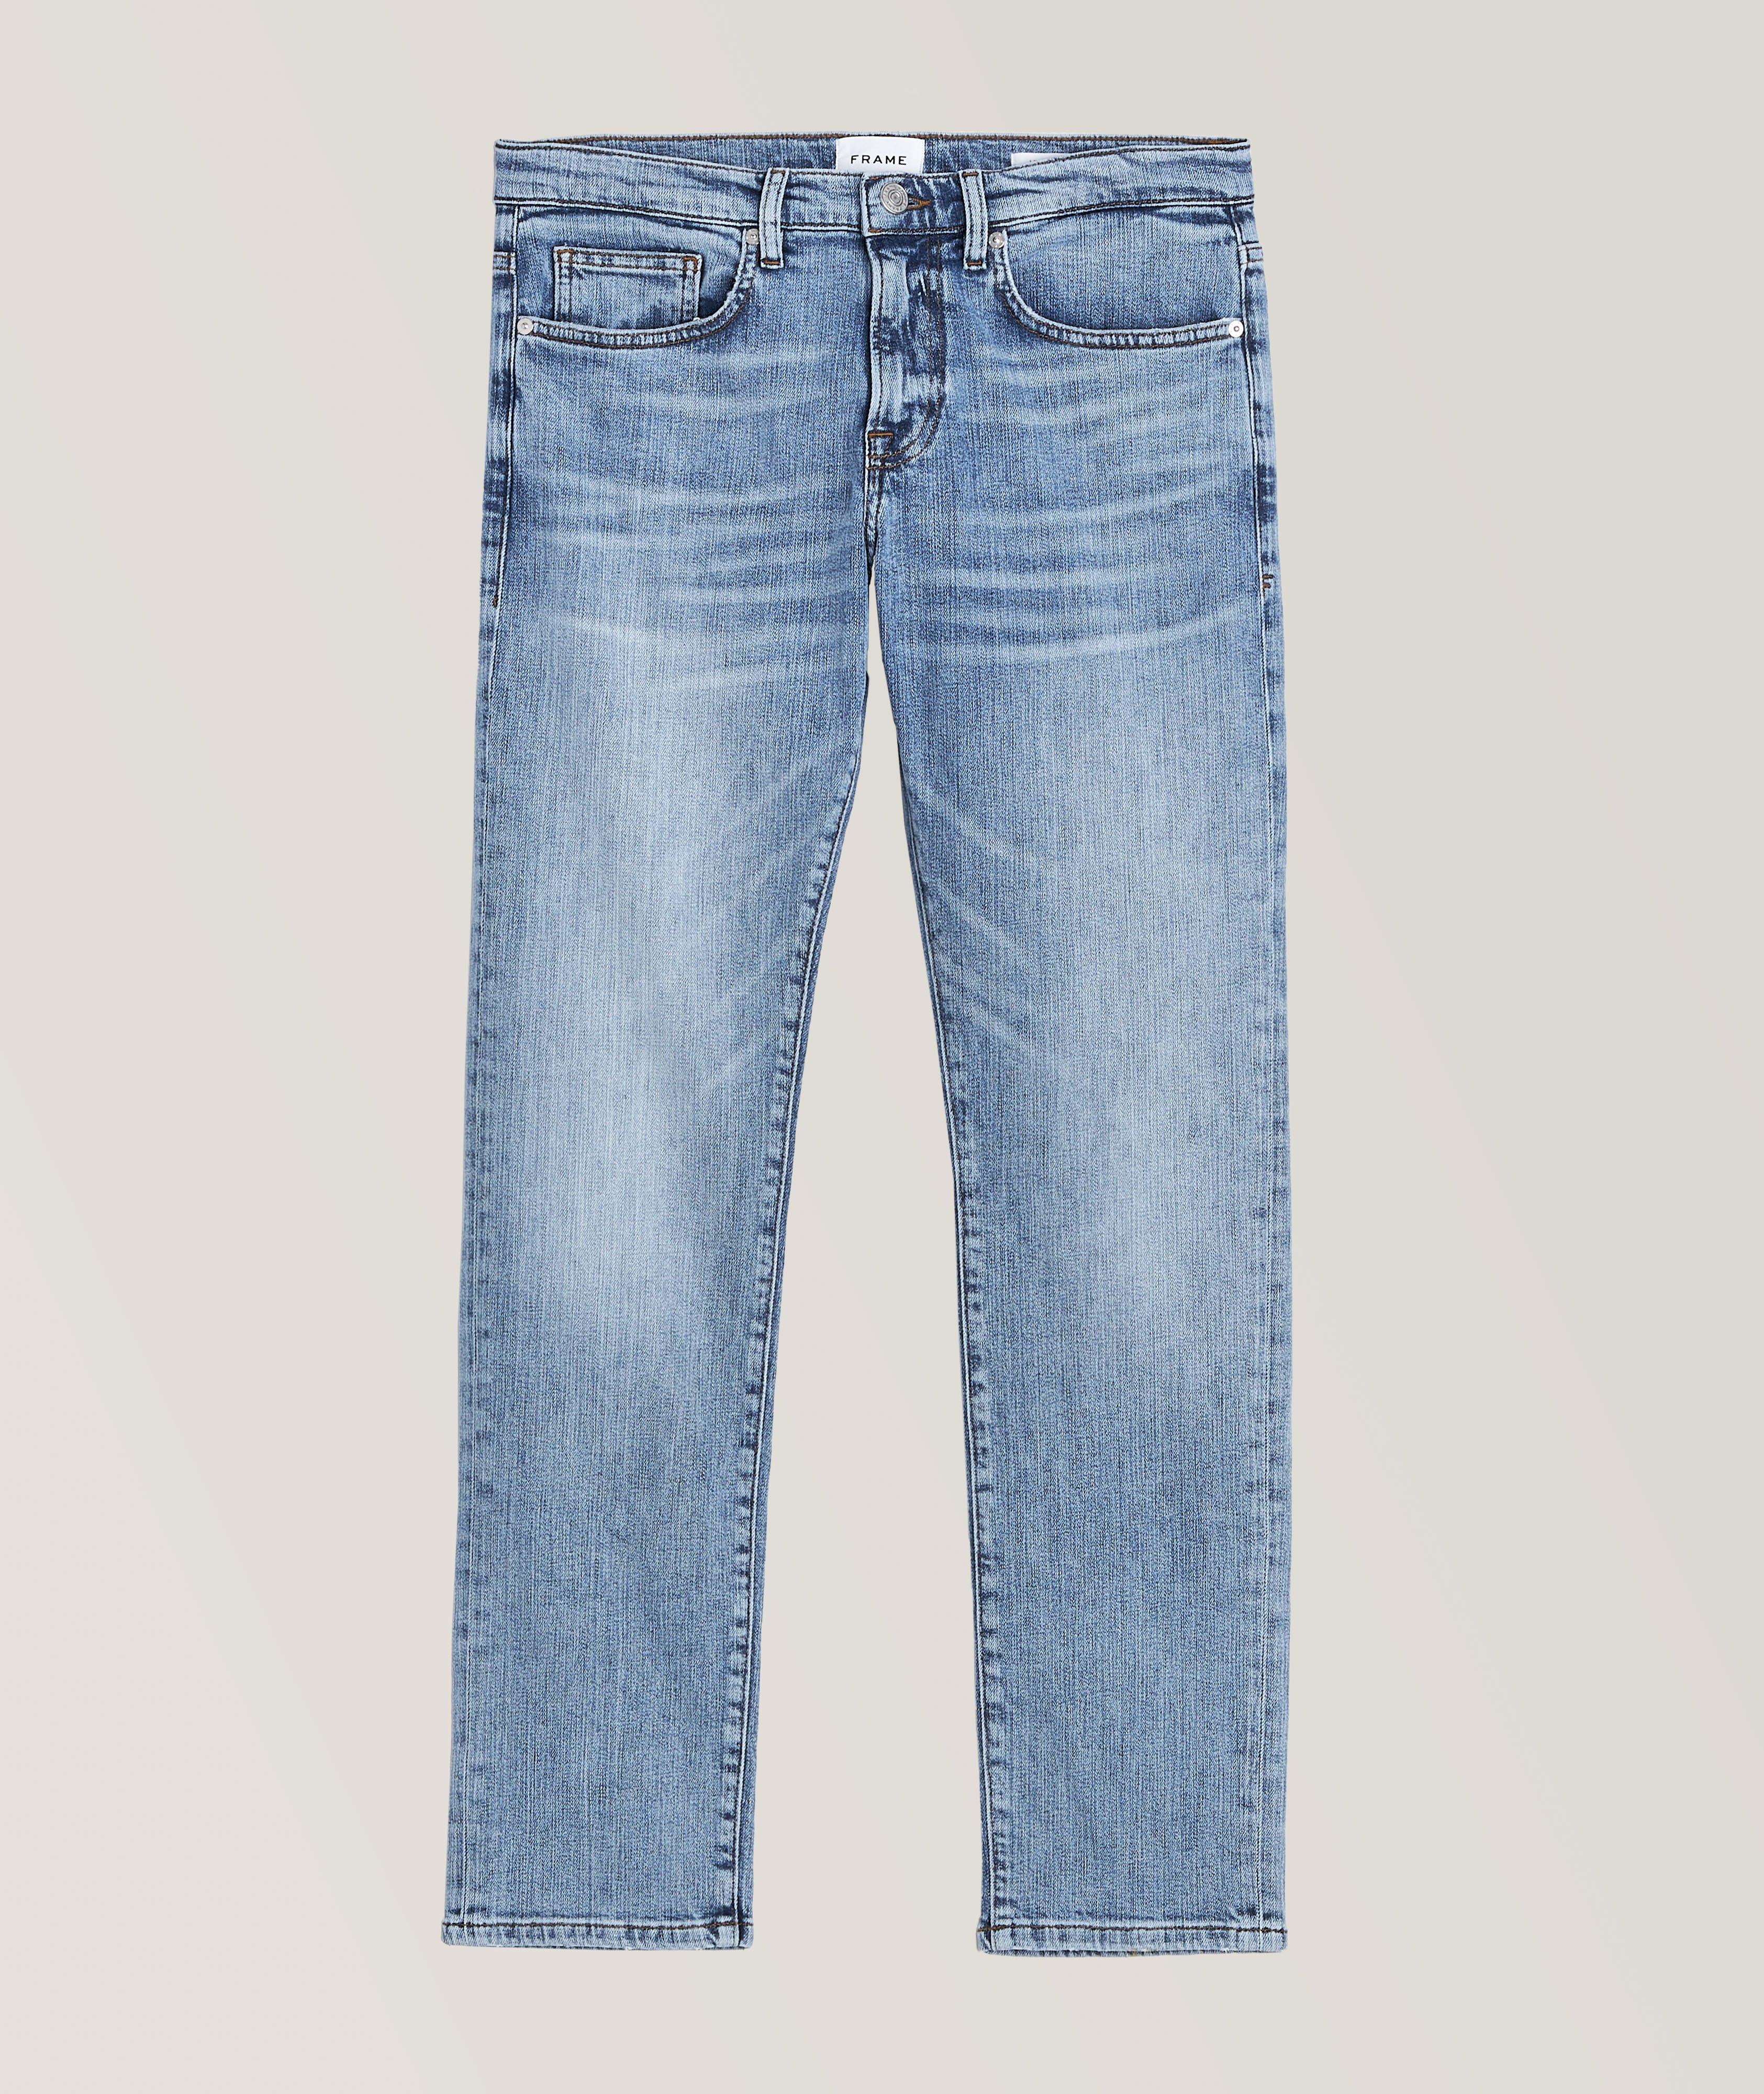 L'Homme Slim-Fit Distressed Jeans image 0